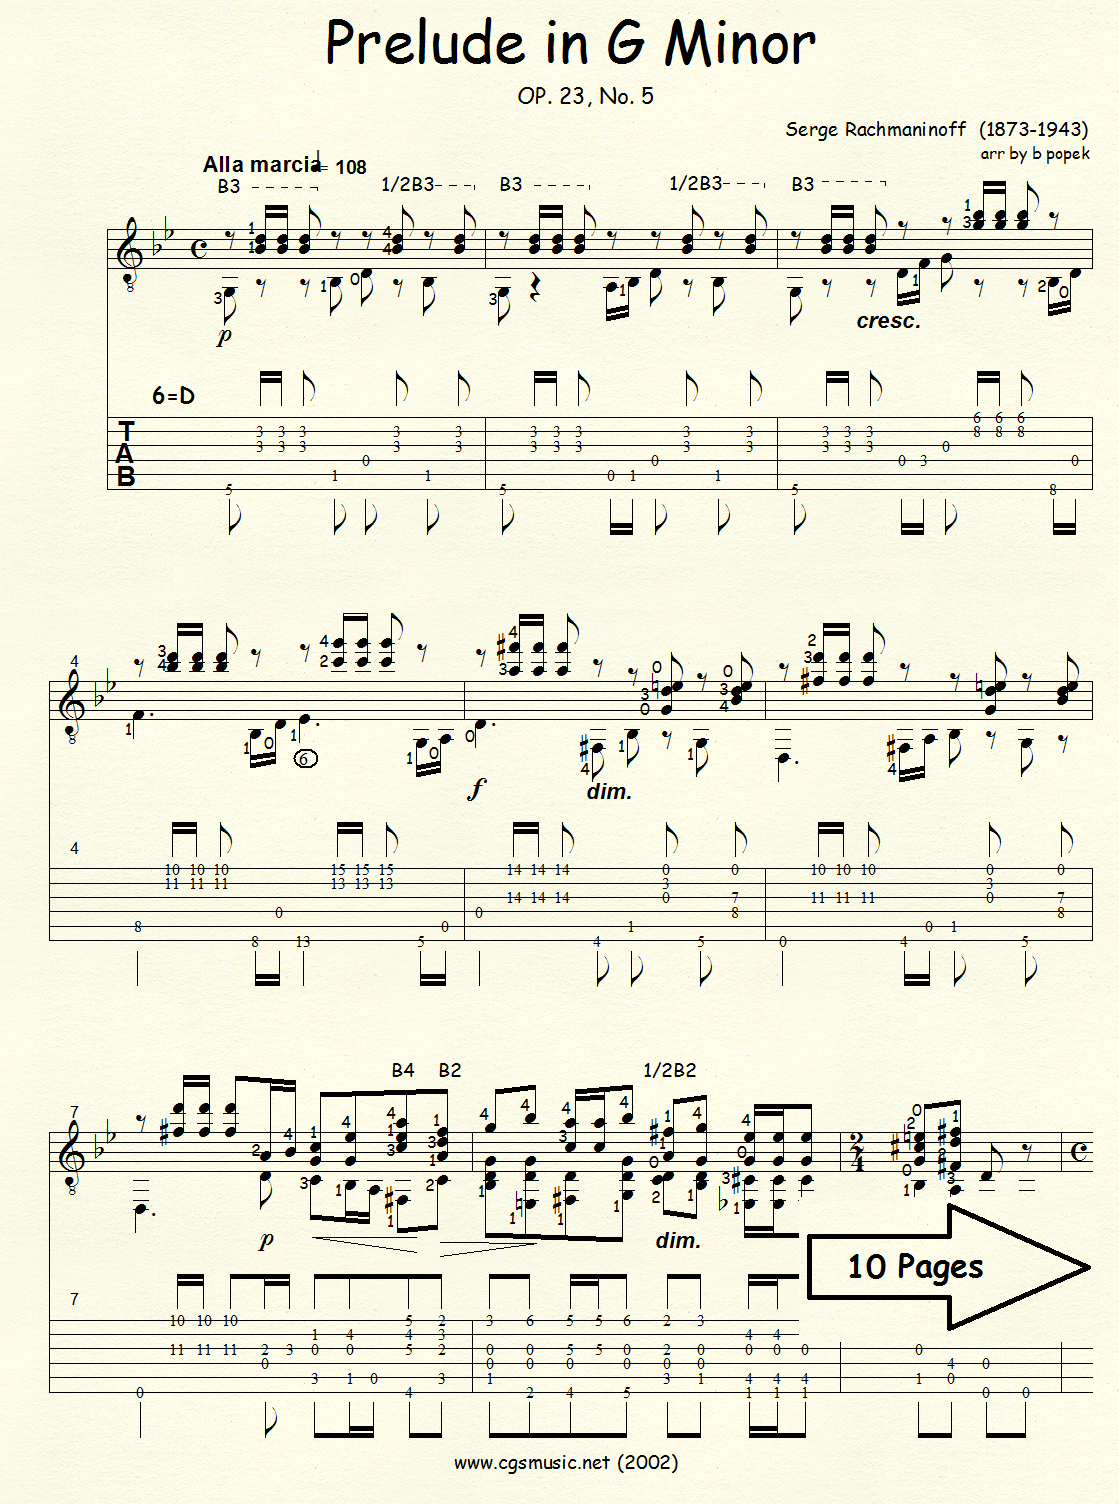 Prelude in G Minor Op 23 #5 (Rachmaninoff) for Classical Guitar in Tablature